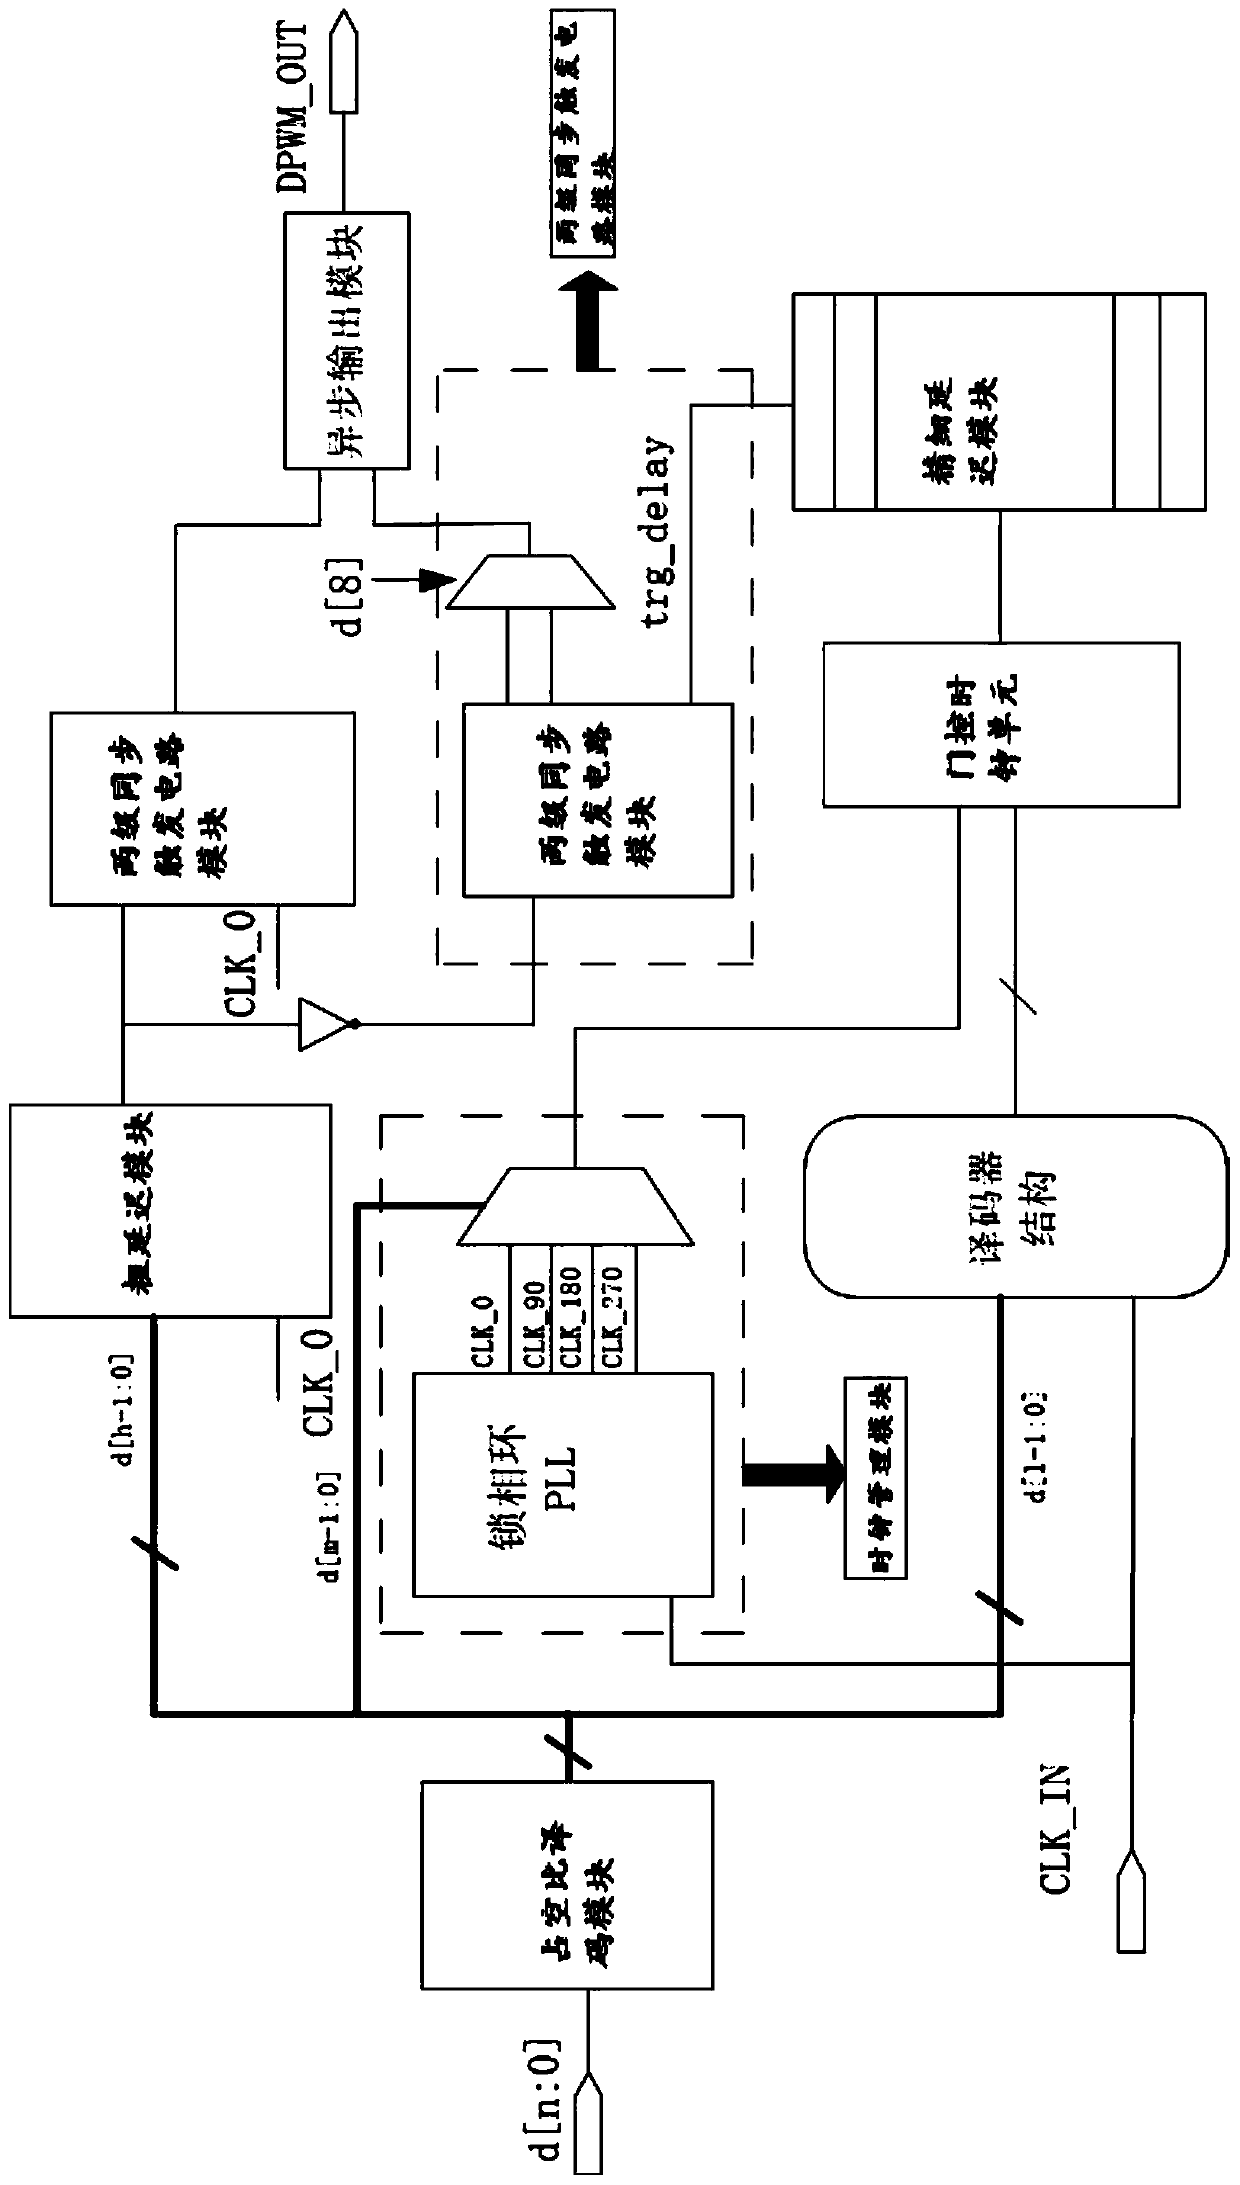 Digital pulse width modulation circuit and working method